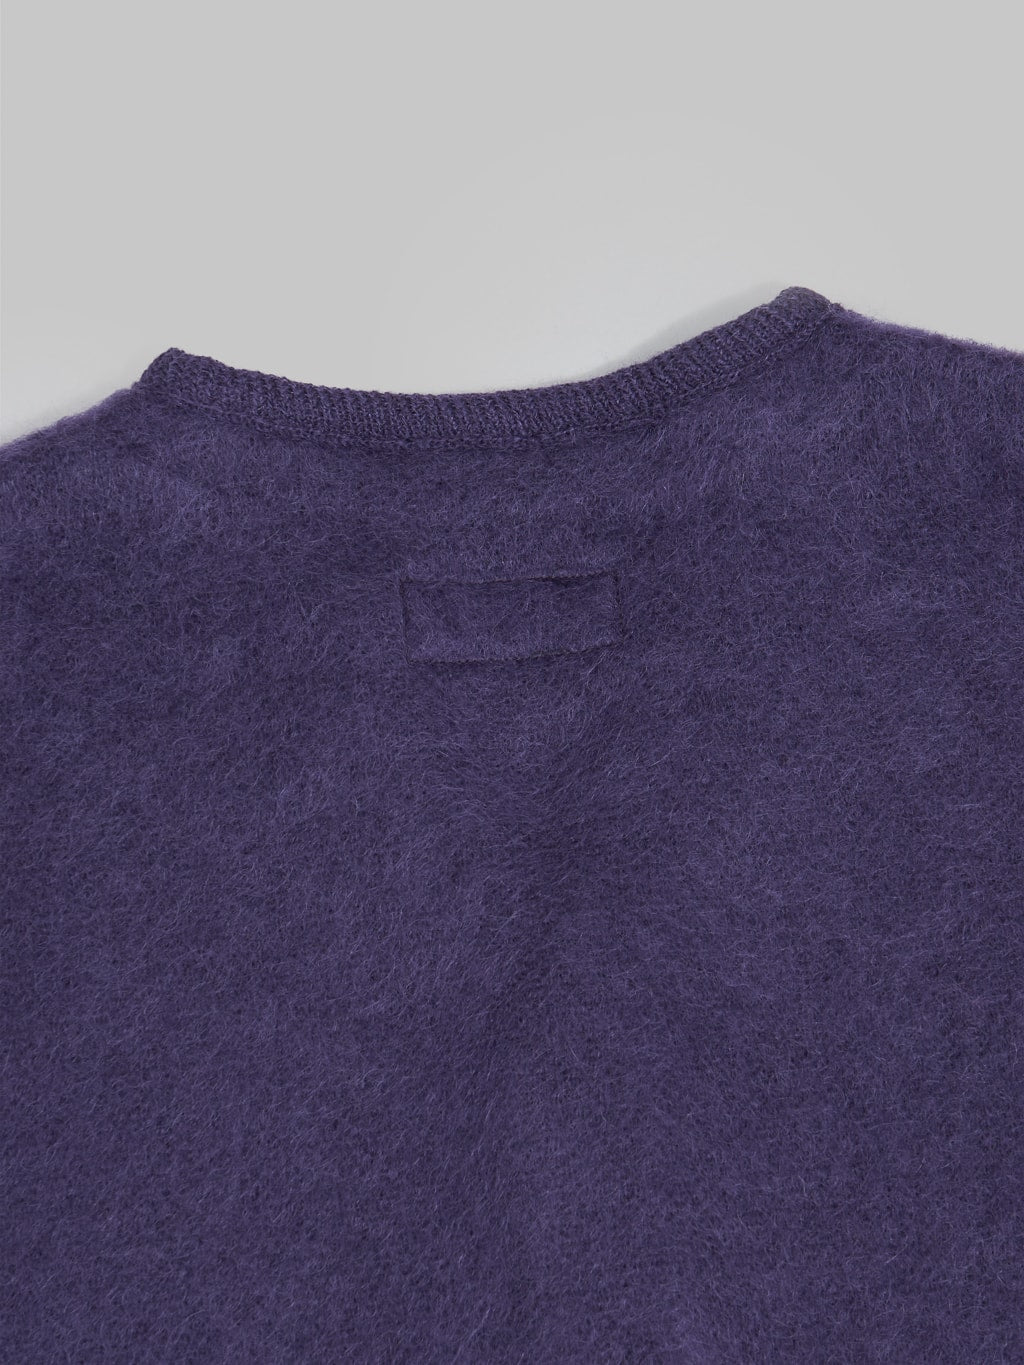 Trophy Clothing Mohair Knit Cardigan Dark Purple collar stitching